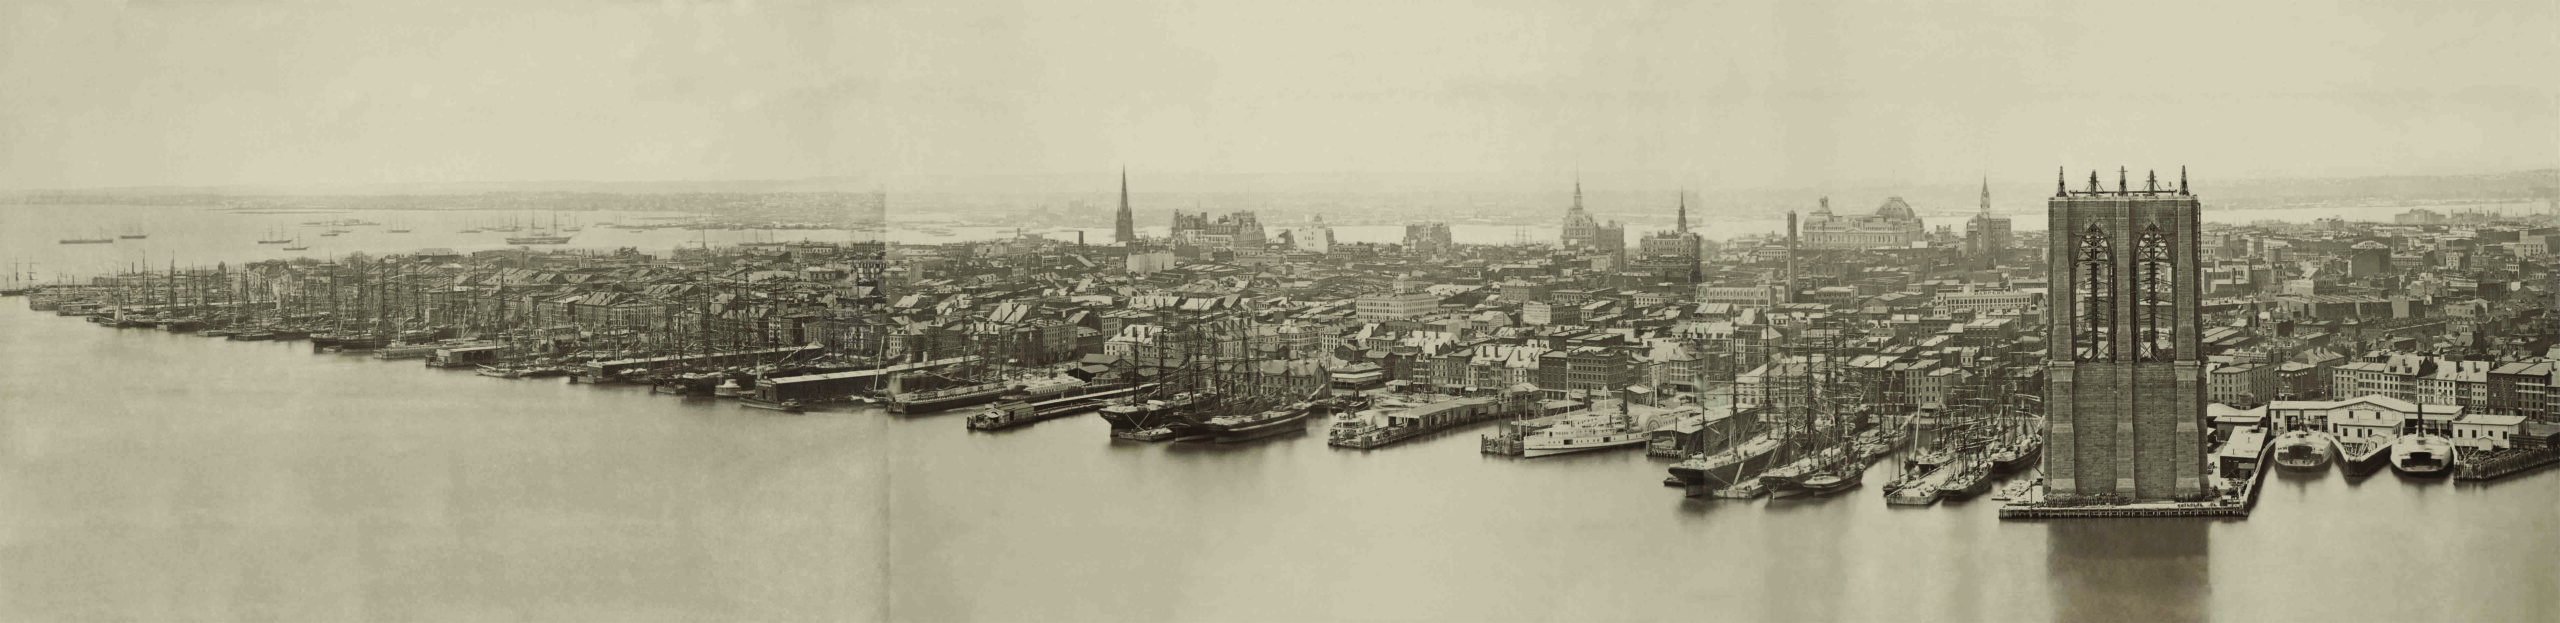 Panoramic view of Manhattan, showing Brooklyn Bridge under construction. Joshua Beal, 1876. New York Public Library.